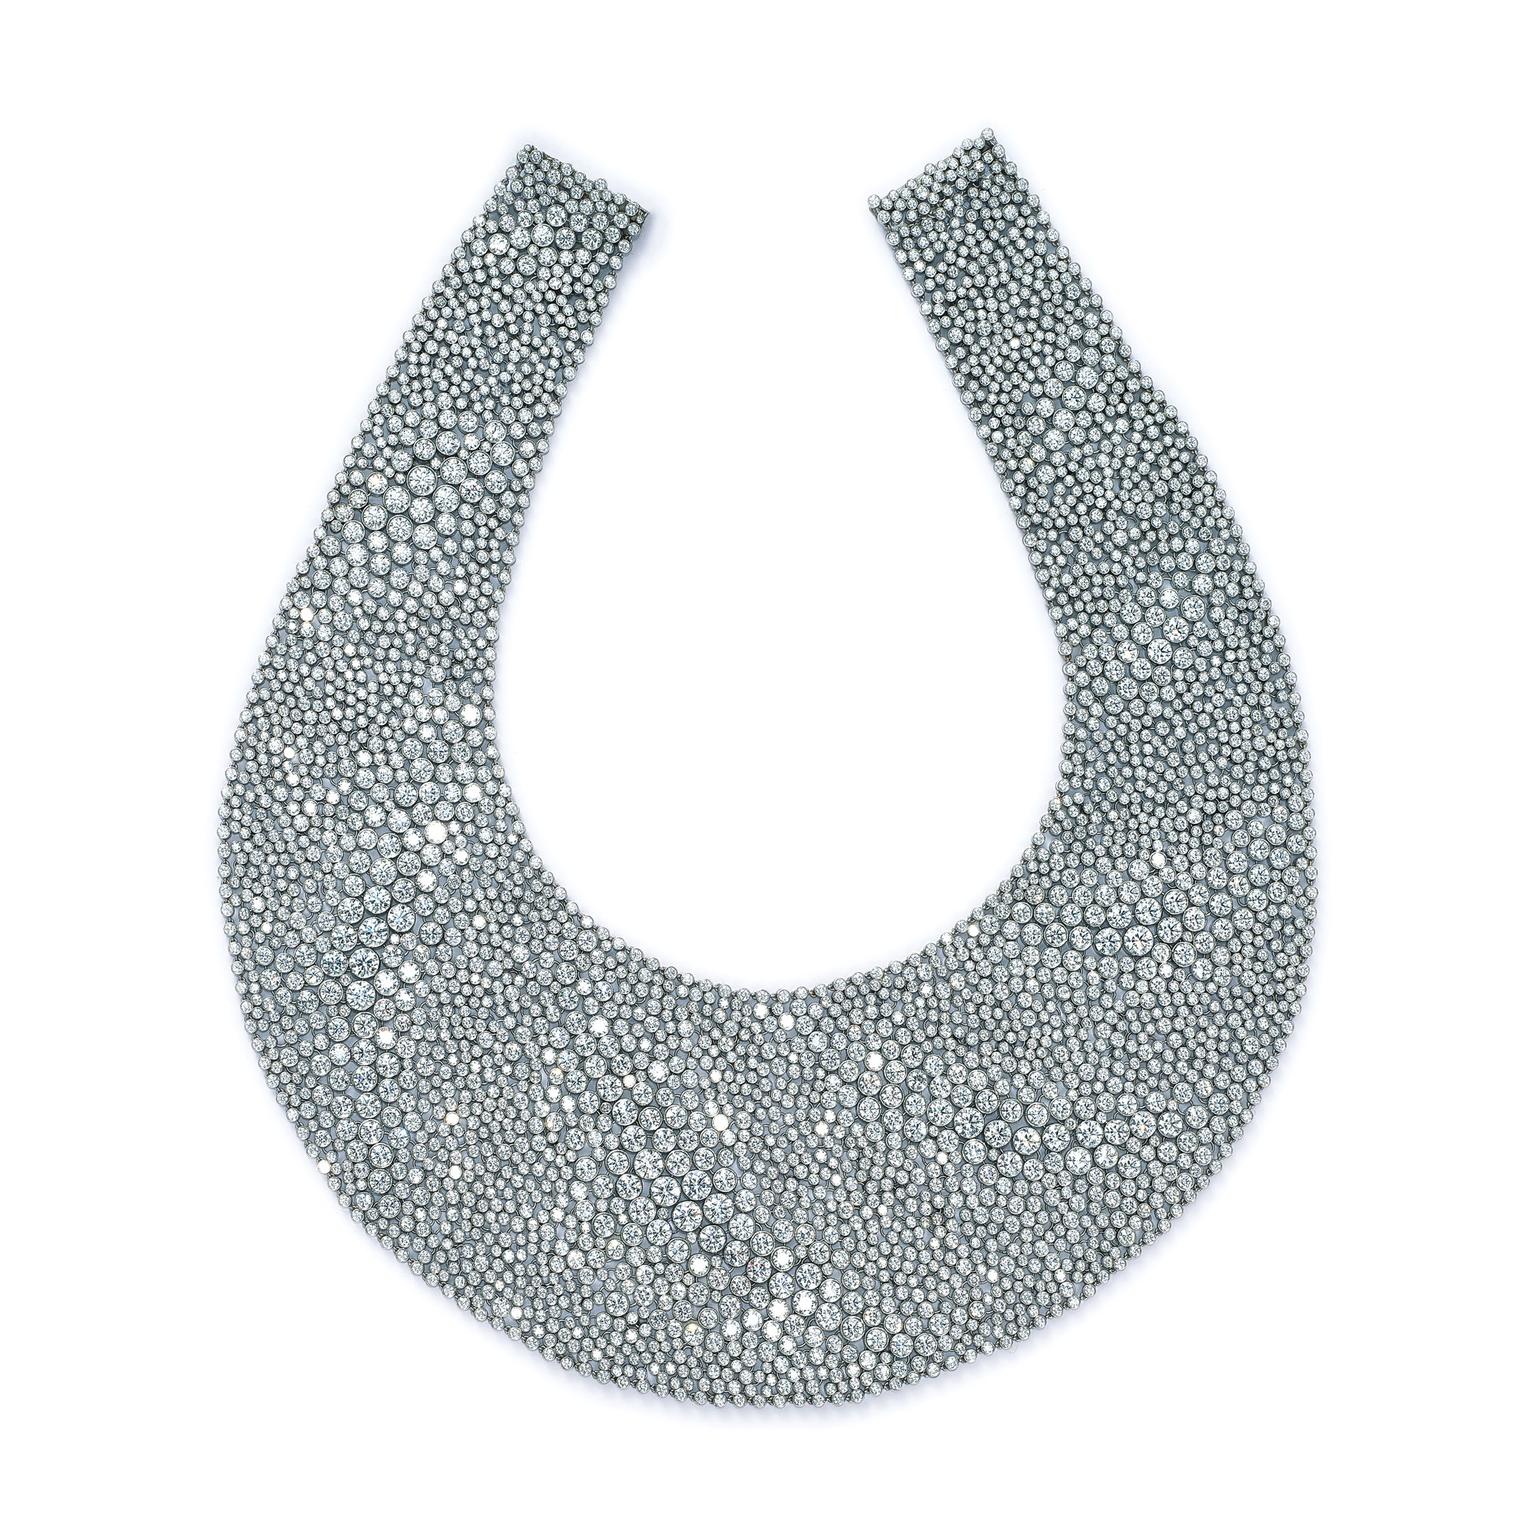 Tiffany Blue Book 2016 diamond necklace